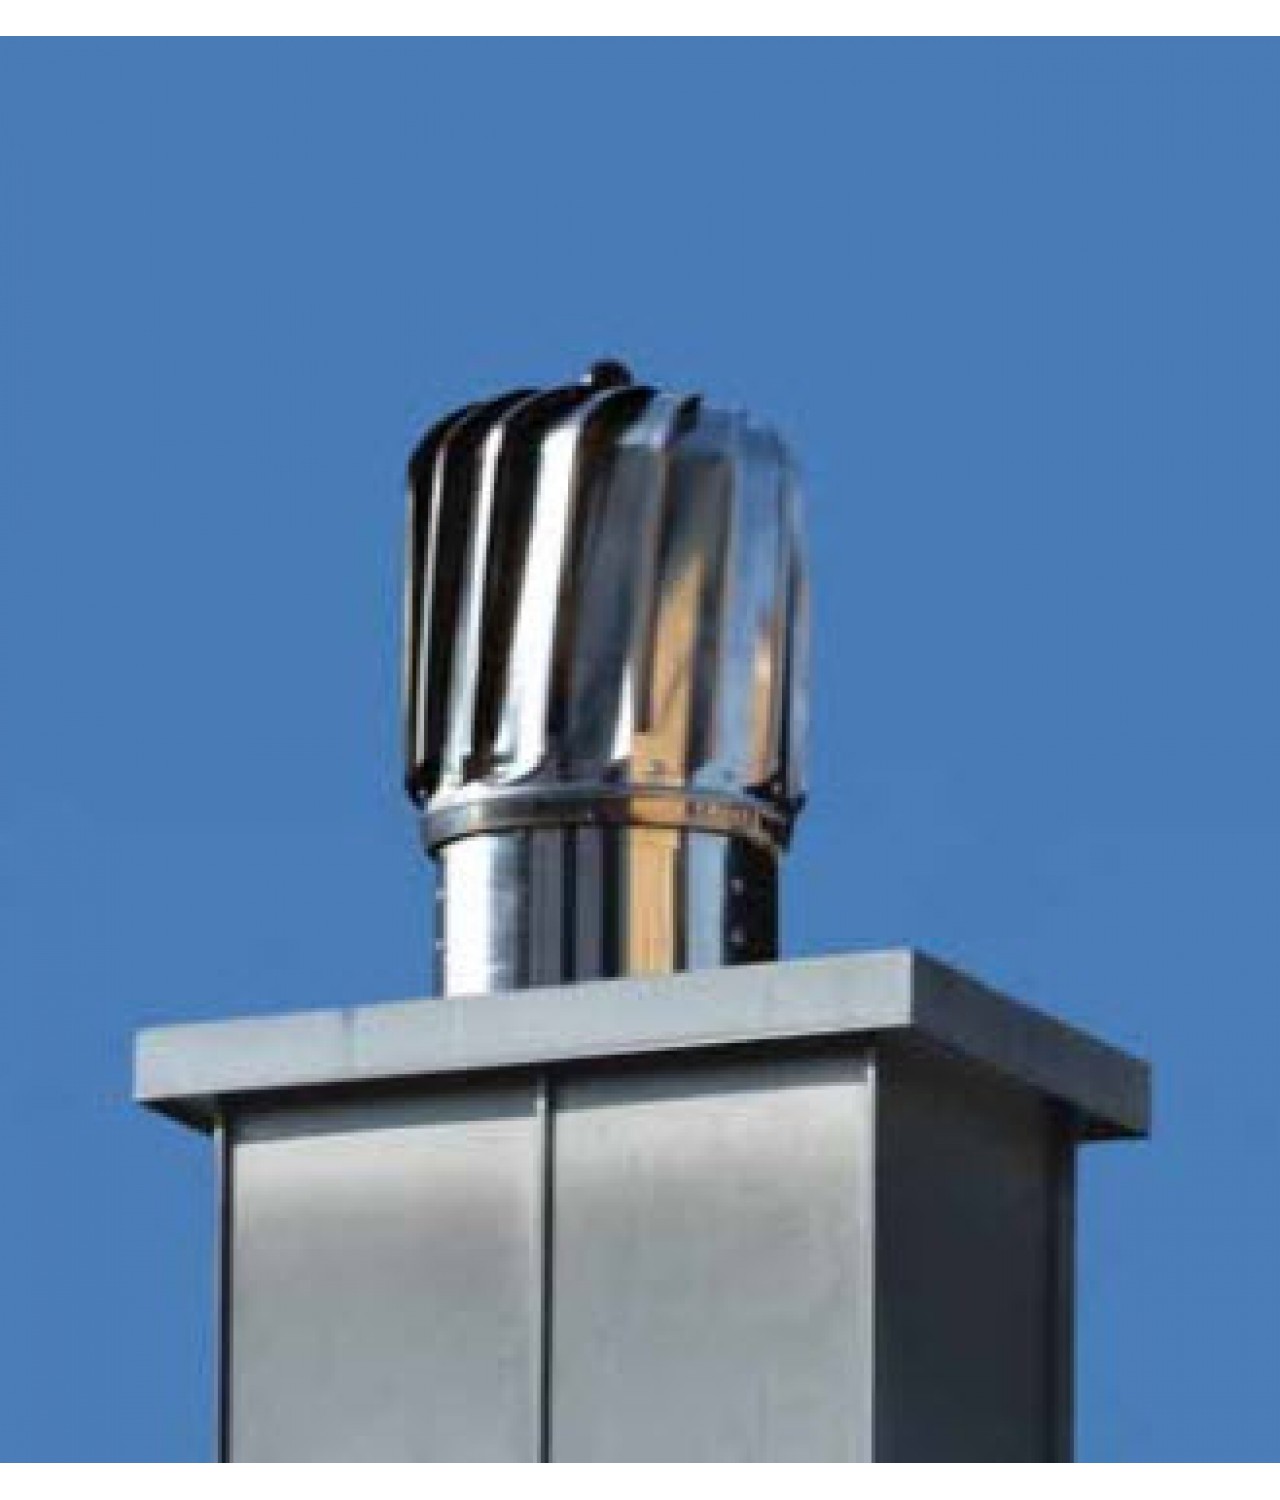 Cilindrinis deflektorius ventiliacijai NOP150, Ø150 mm - sumontuotas